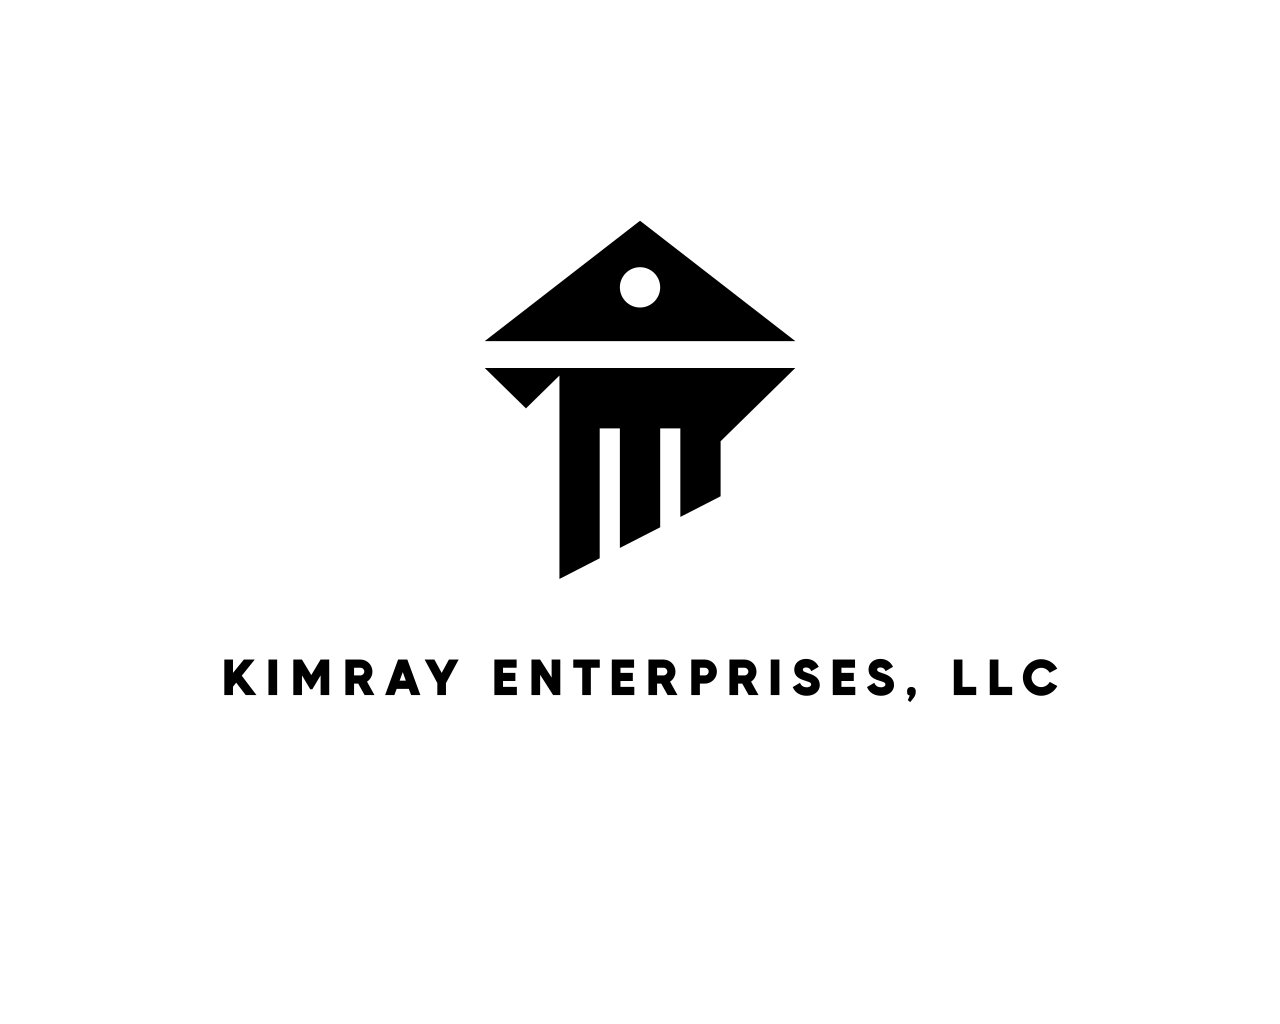 Kimray Enterprises, LLC